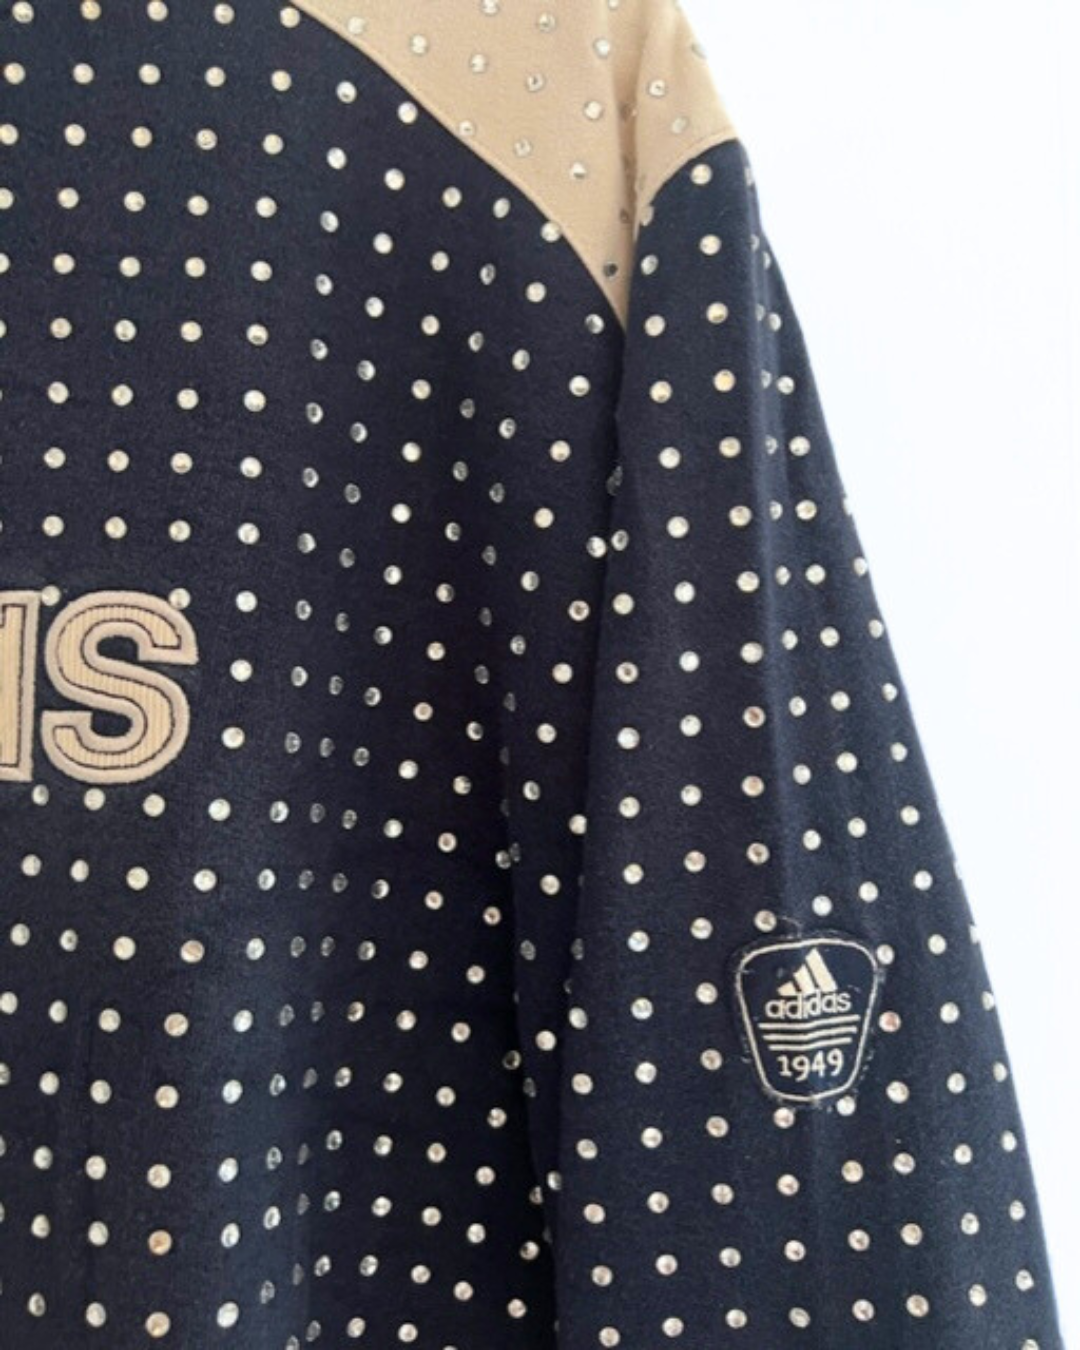 Vintage Navy and Cream ADIDAS Sweatshirt with all over diamante studs